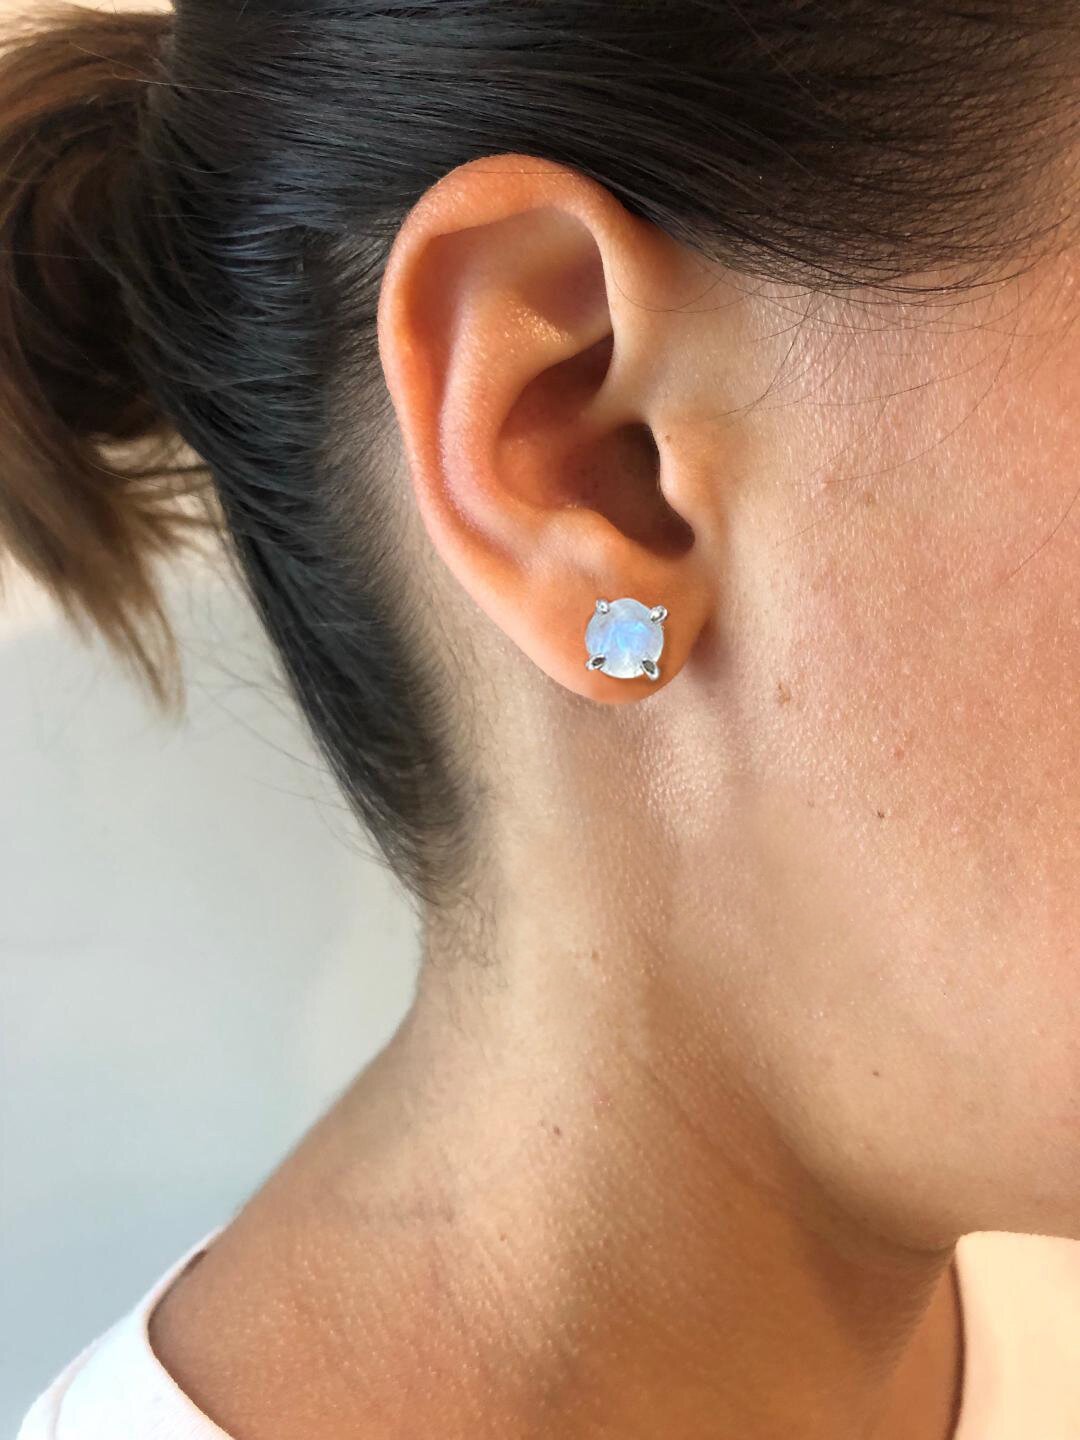 Aggregate 66+ silver earrings toronto latest